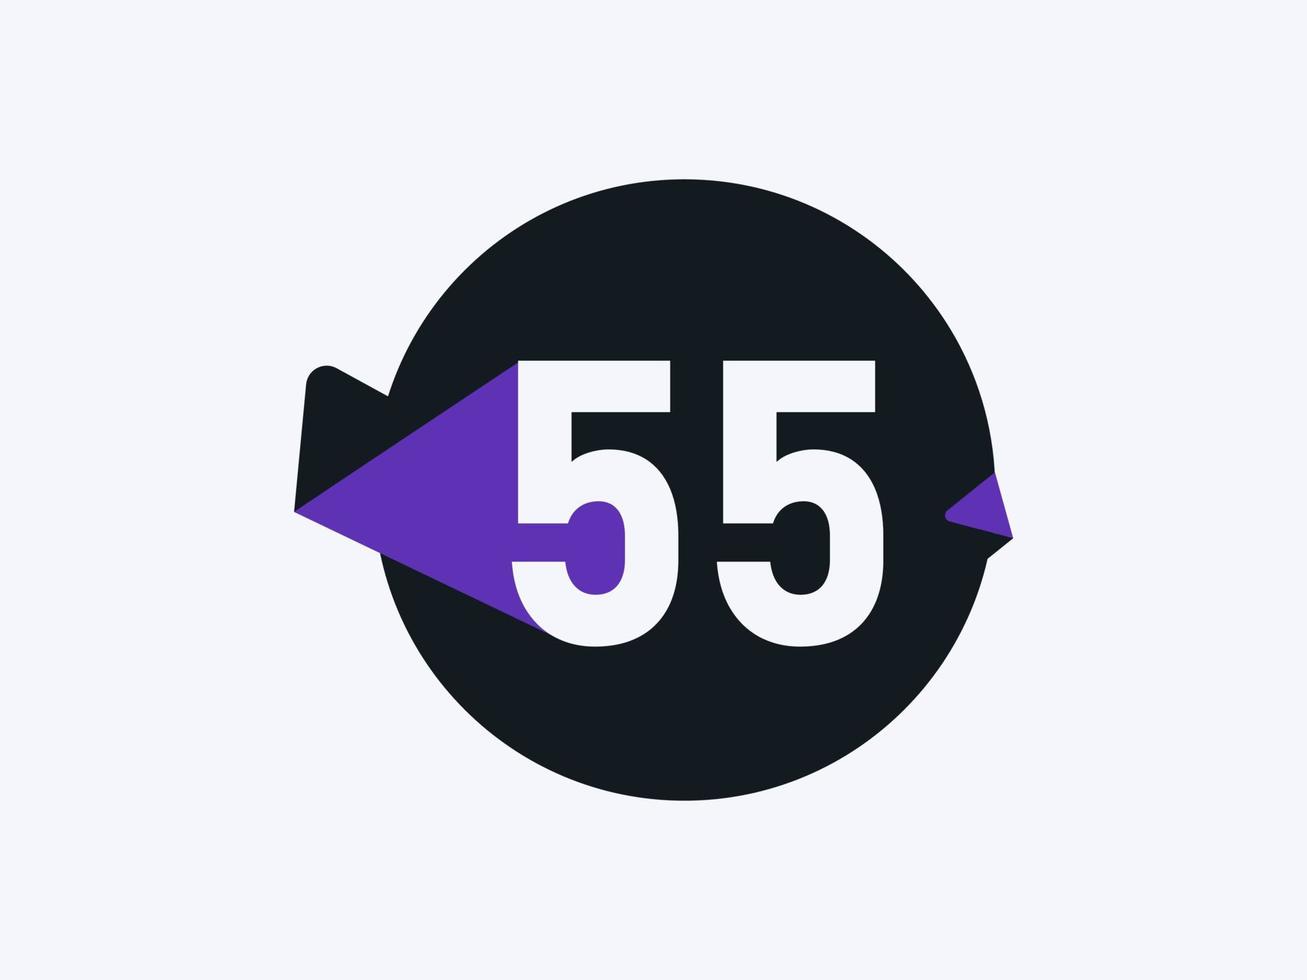 55 Number logo icon design vector image. Number logo icon design vector image